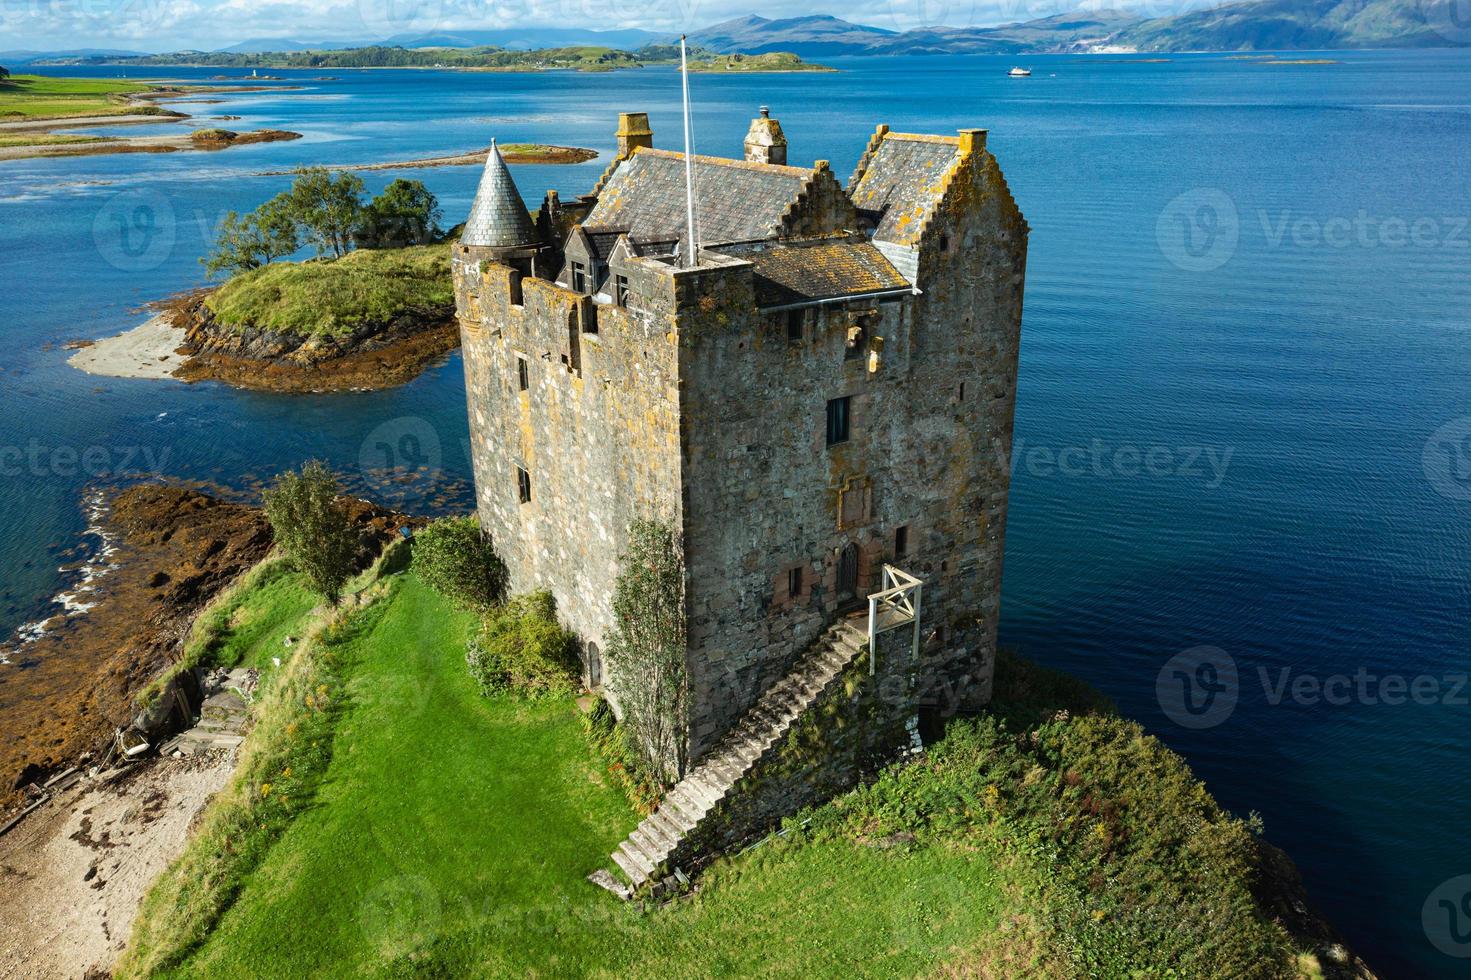 Castle Stalker, Schottland, Großbritannien foto